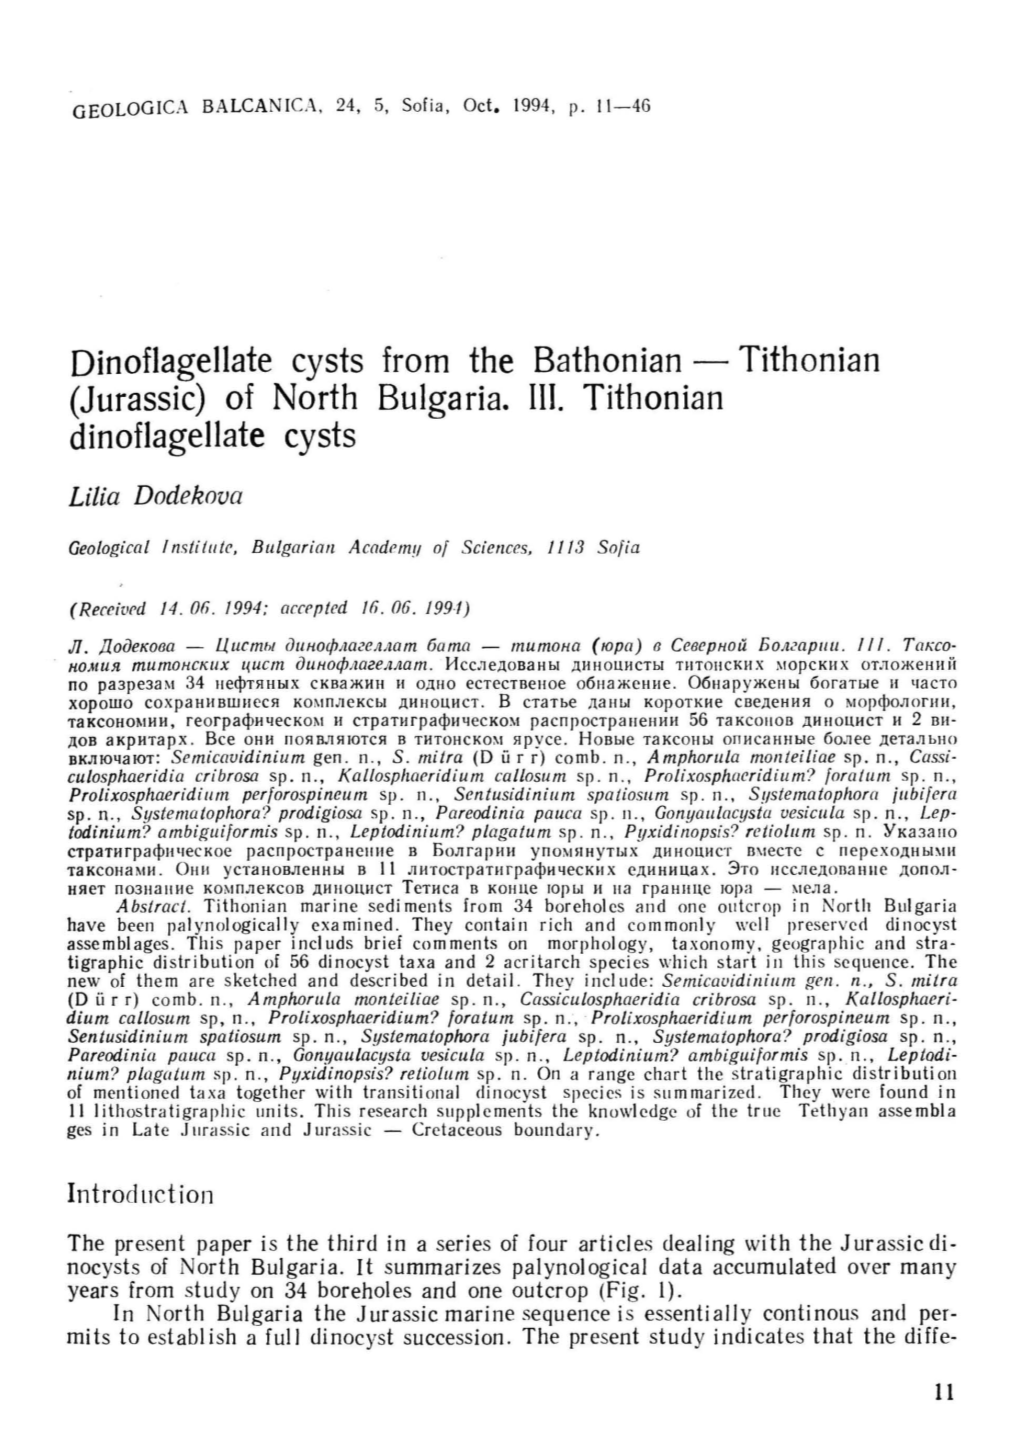 (Jurassic) of North Bulgaria. III. Tithonian Dinoflagellate Cysts Lilia Dodekova